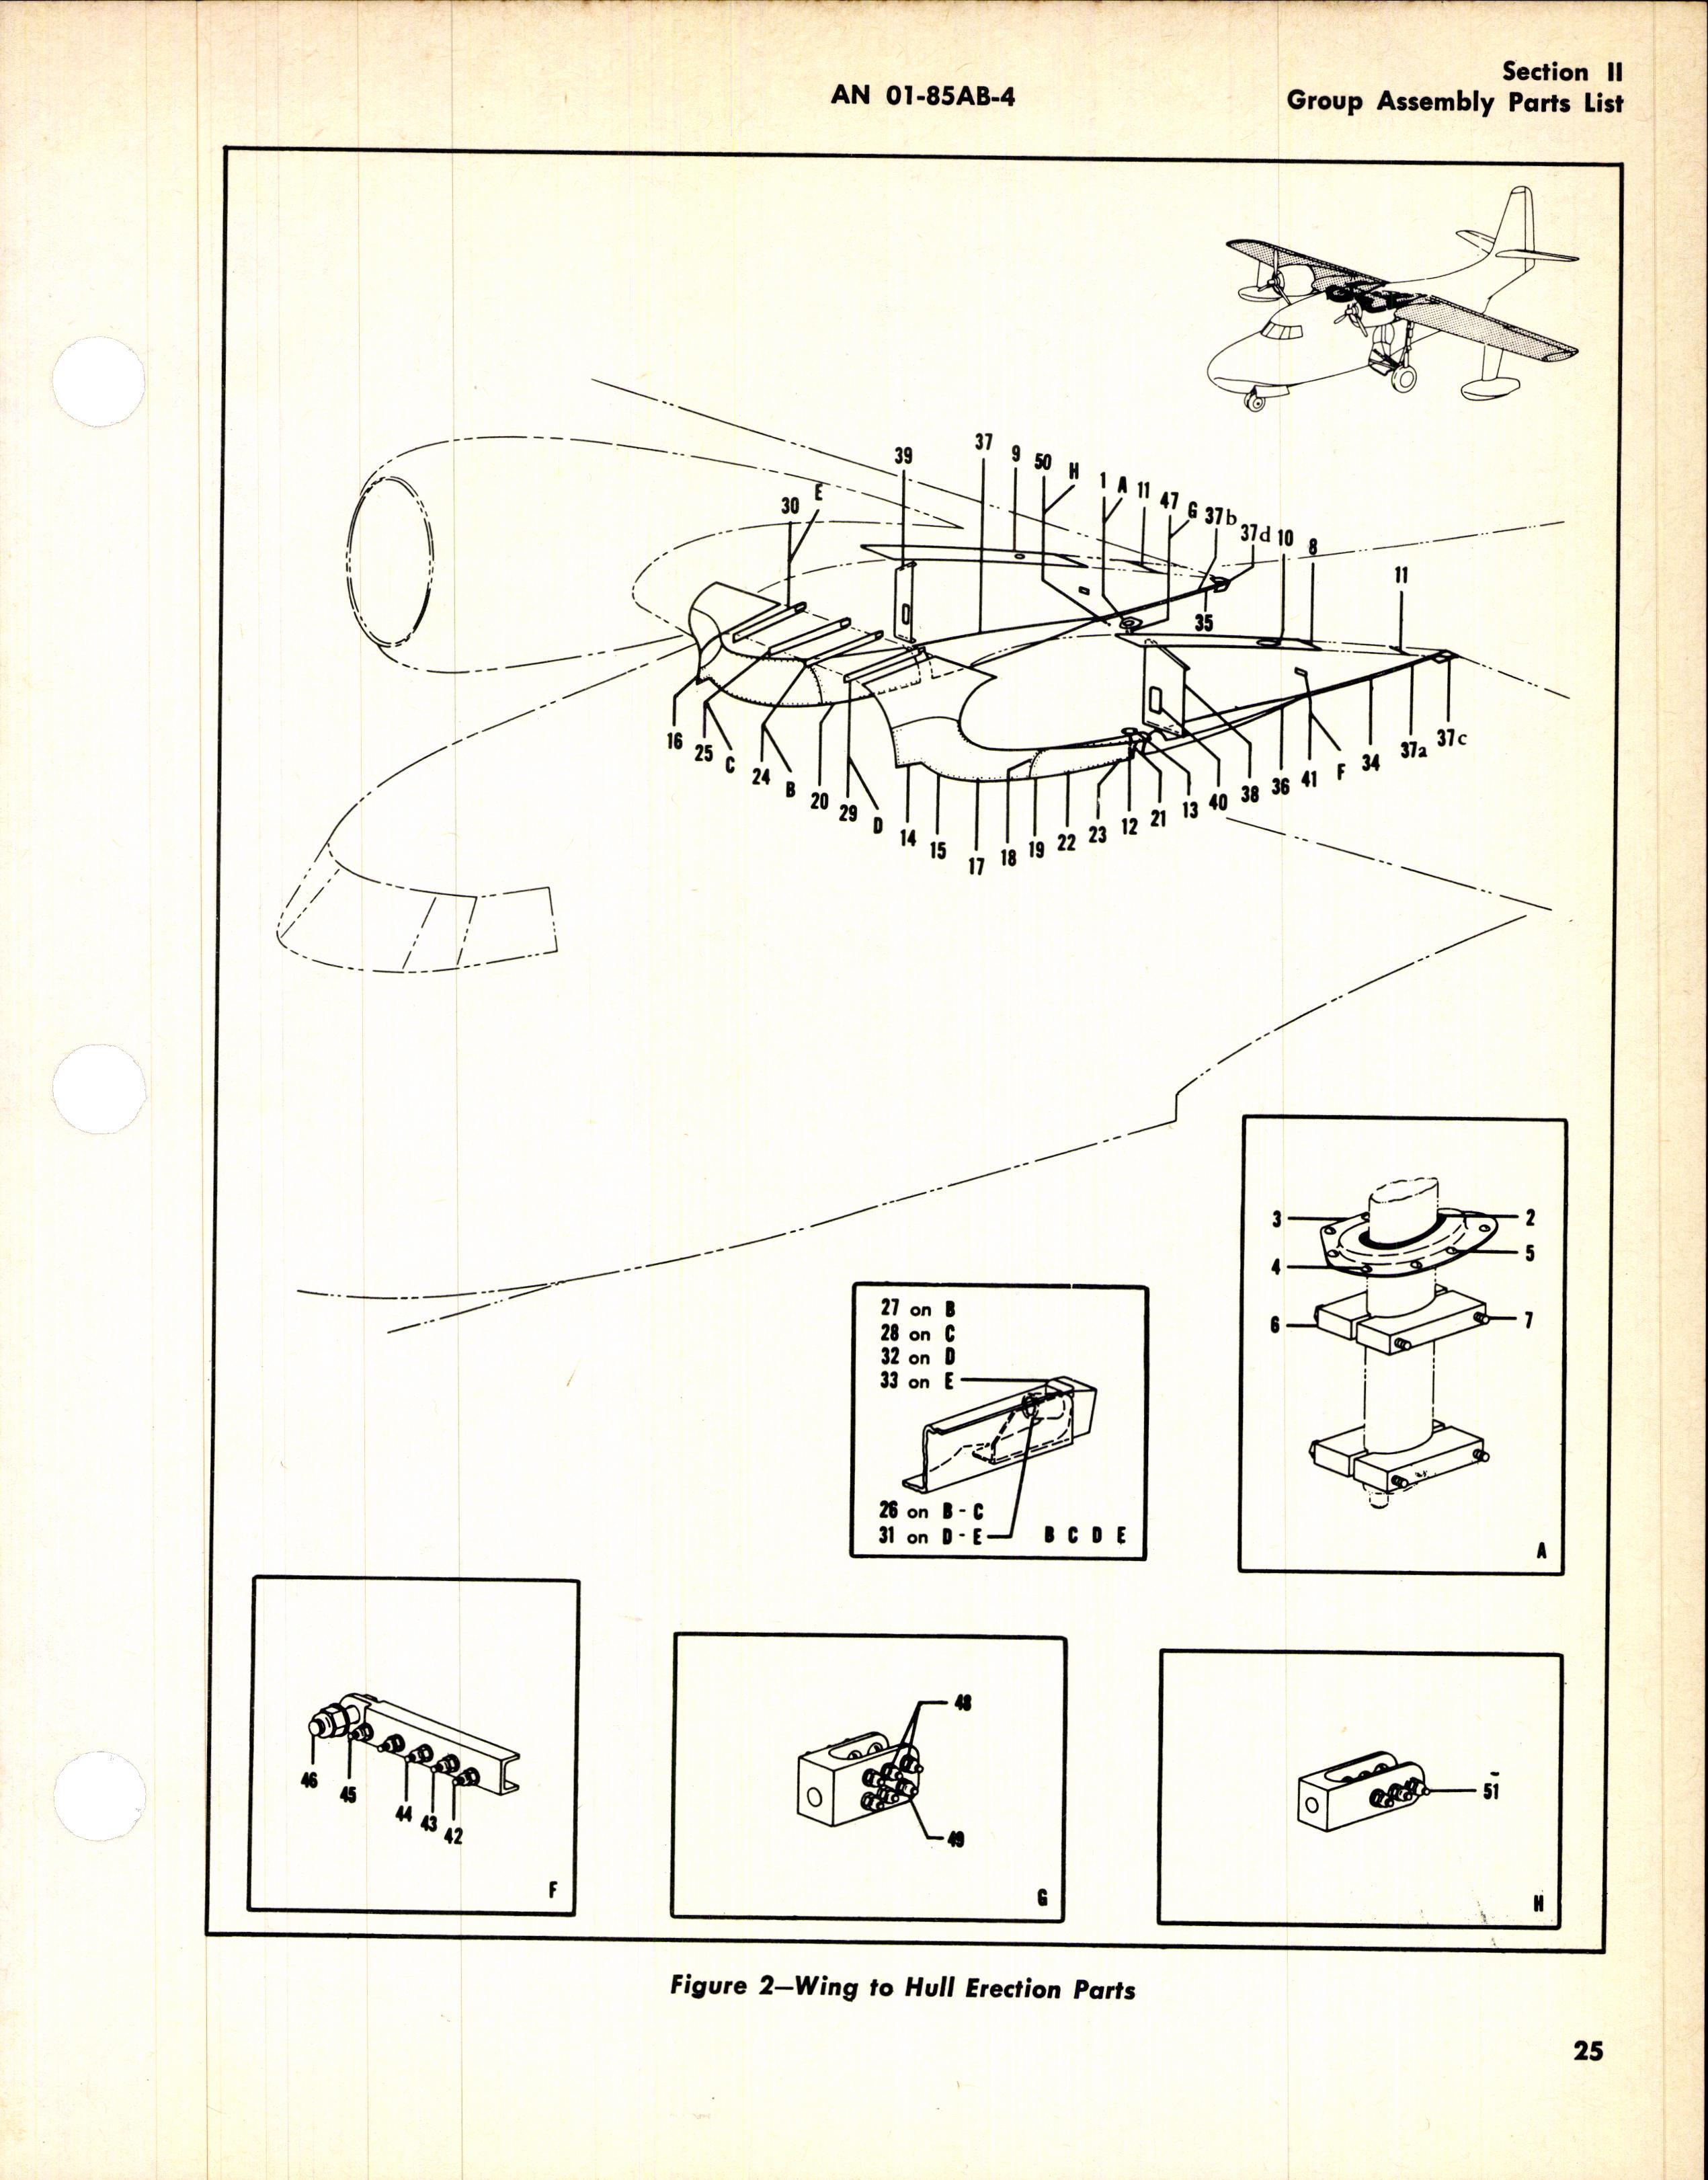 Sample page 73 from AirCorps Library document: Parts Catalog for SA-16A, SA-16B, and UF-1 Aircraft